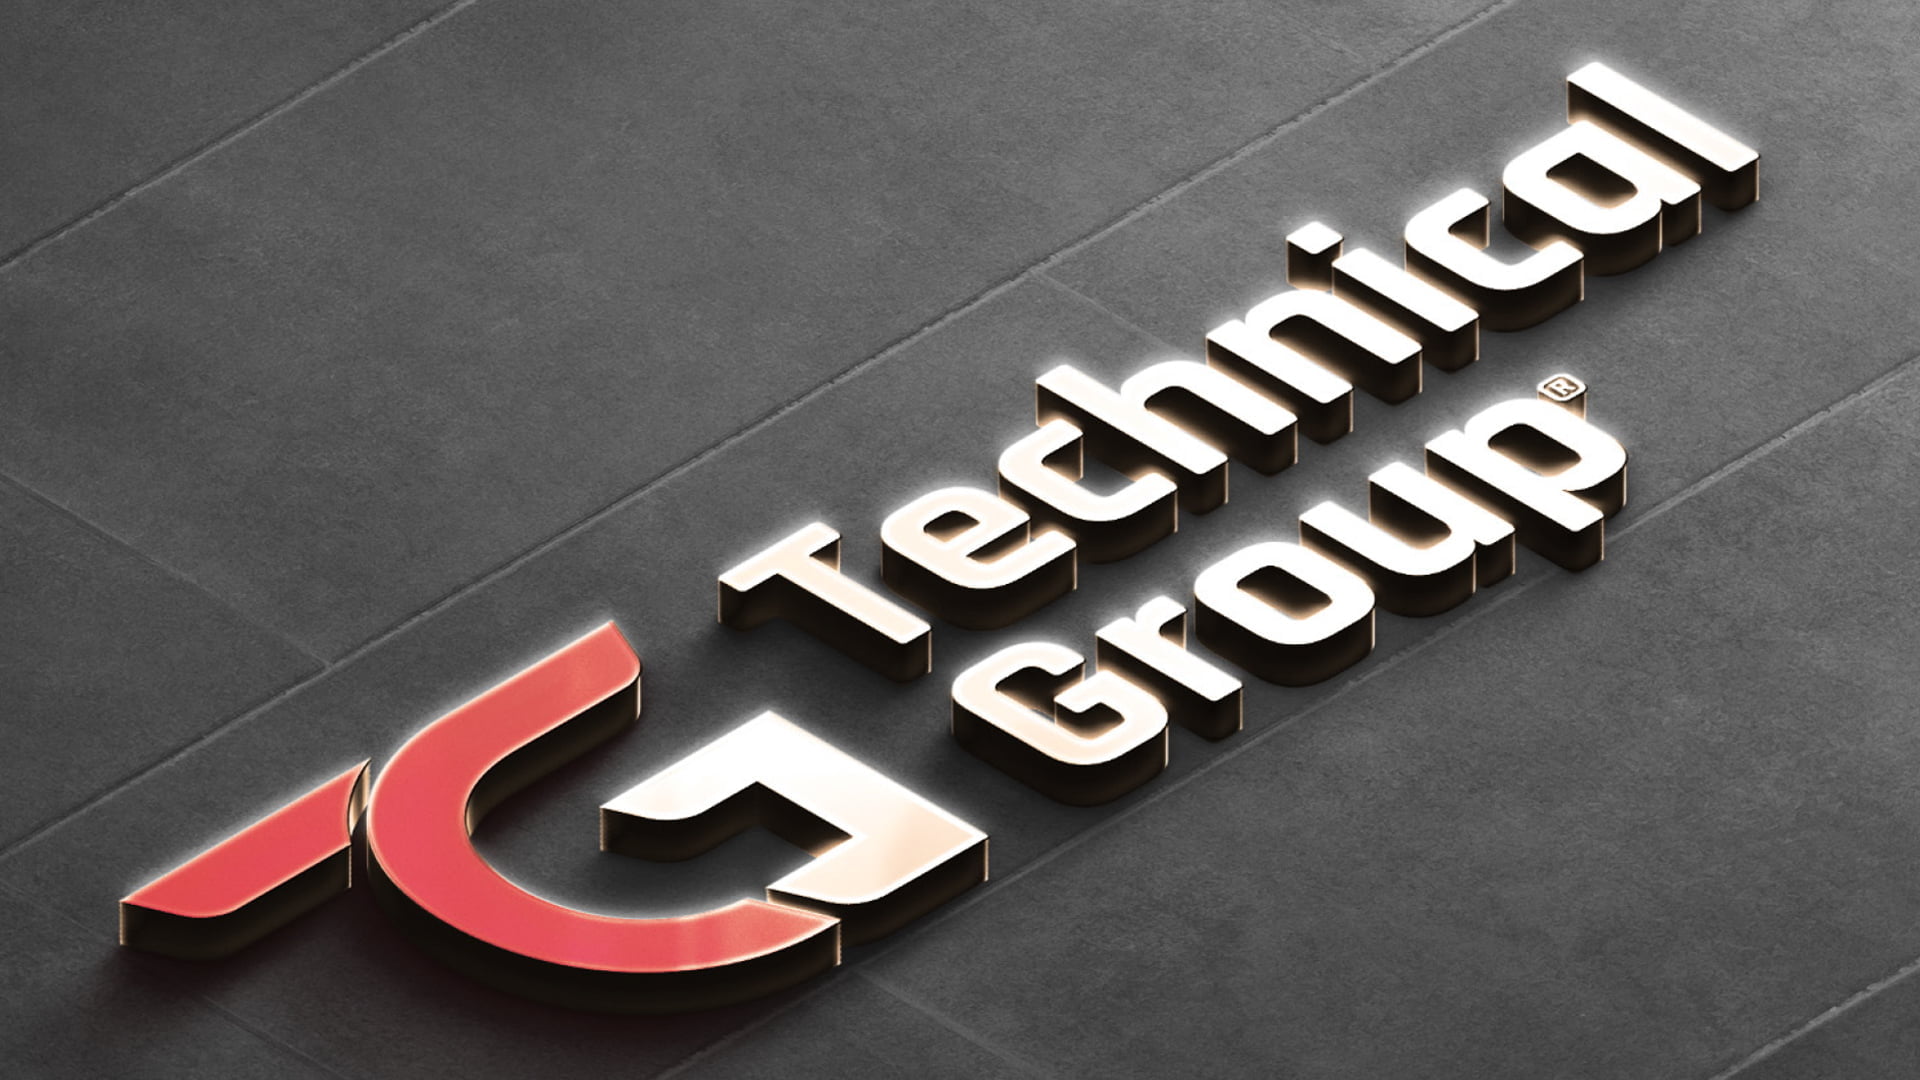 TG Technical Group Kurumsal Kimlik